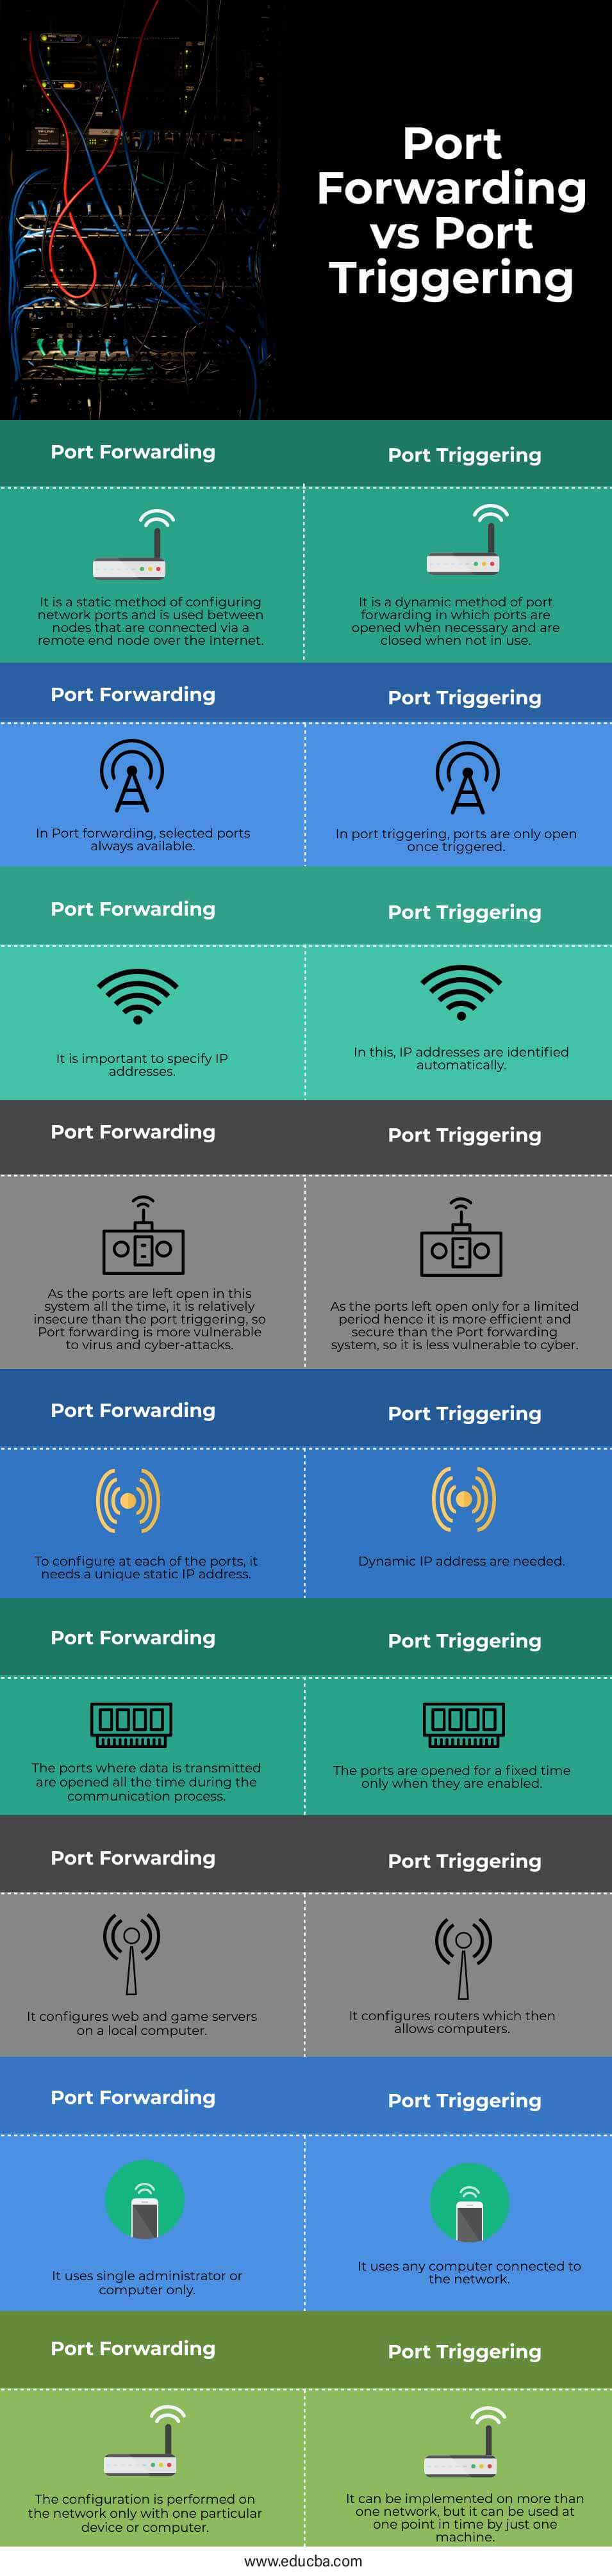 Port-Forwarding-vs-Port-Triggering-info